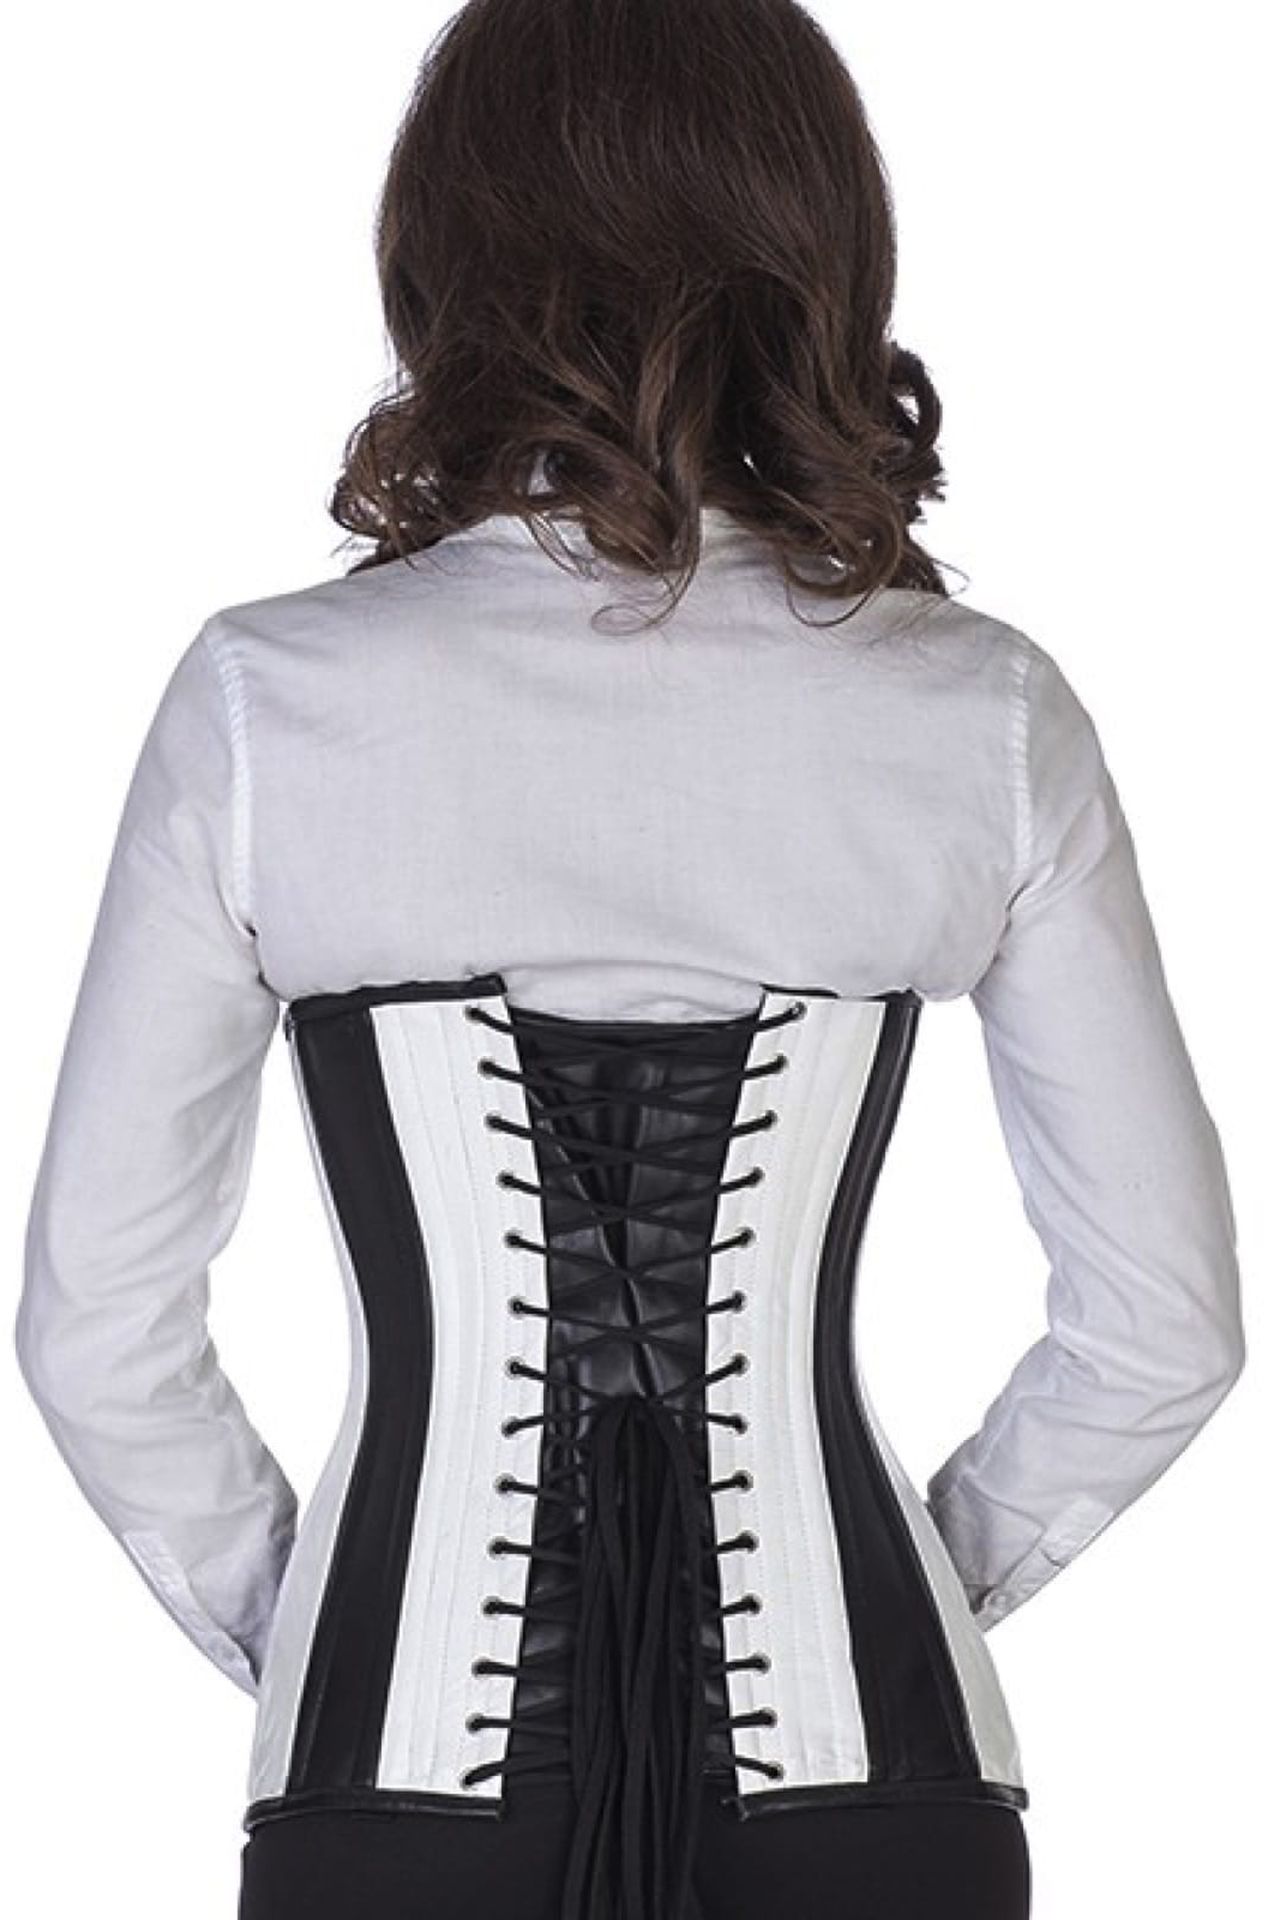 Corse negro blanco cuero bajo pecho ondeado corset ln35